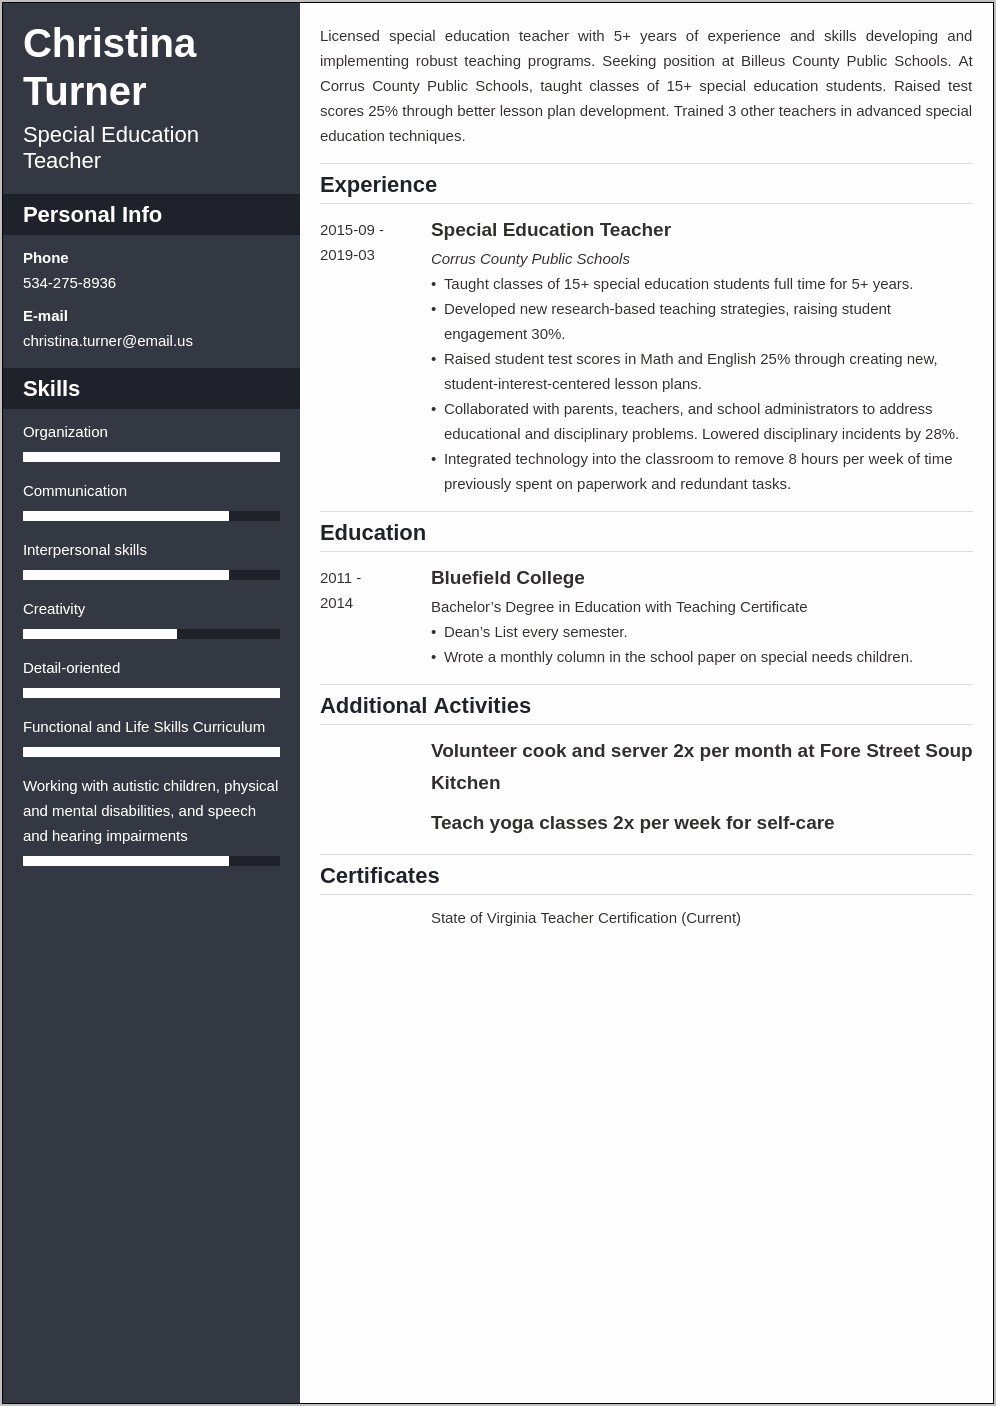 Resume Job Description For Special Education Teacher